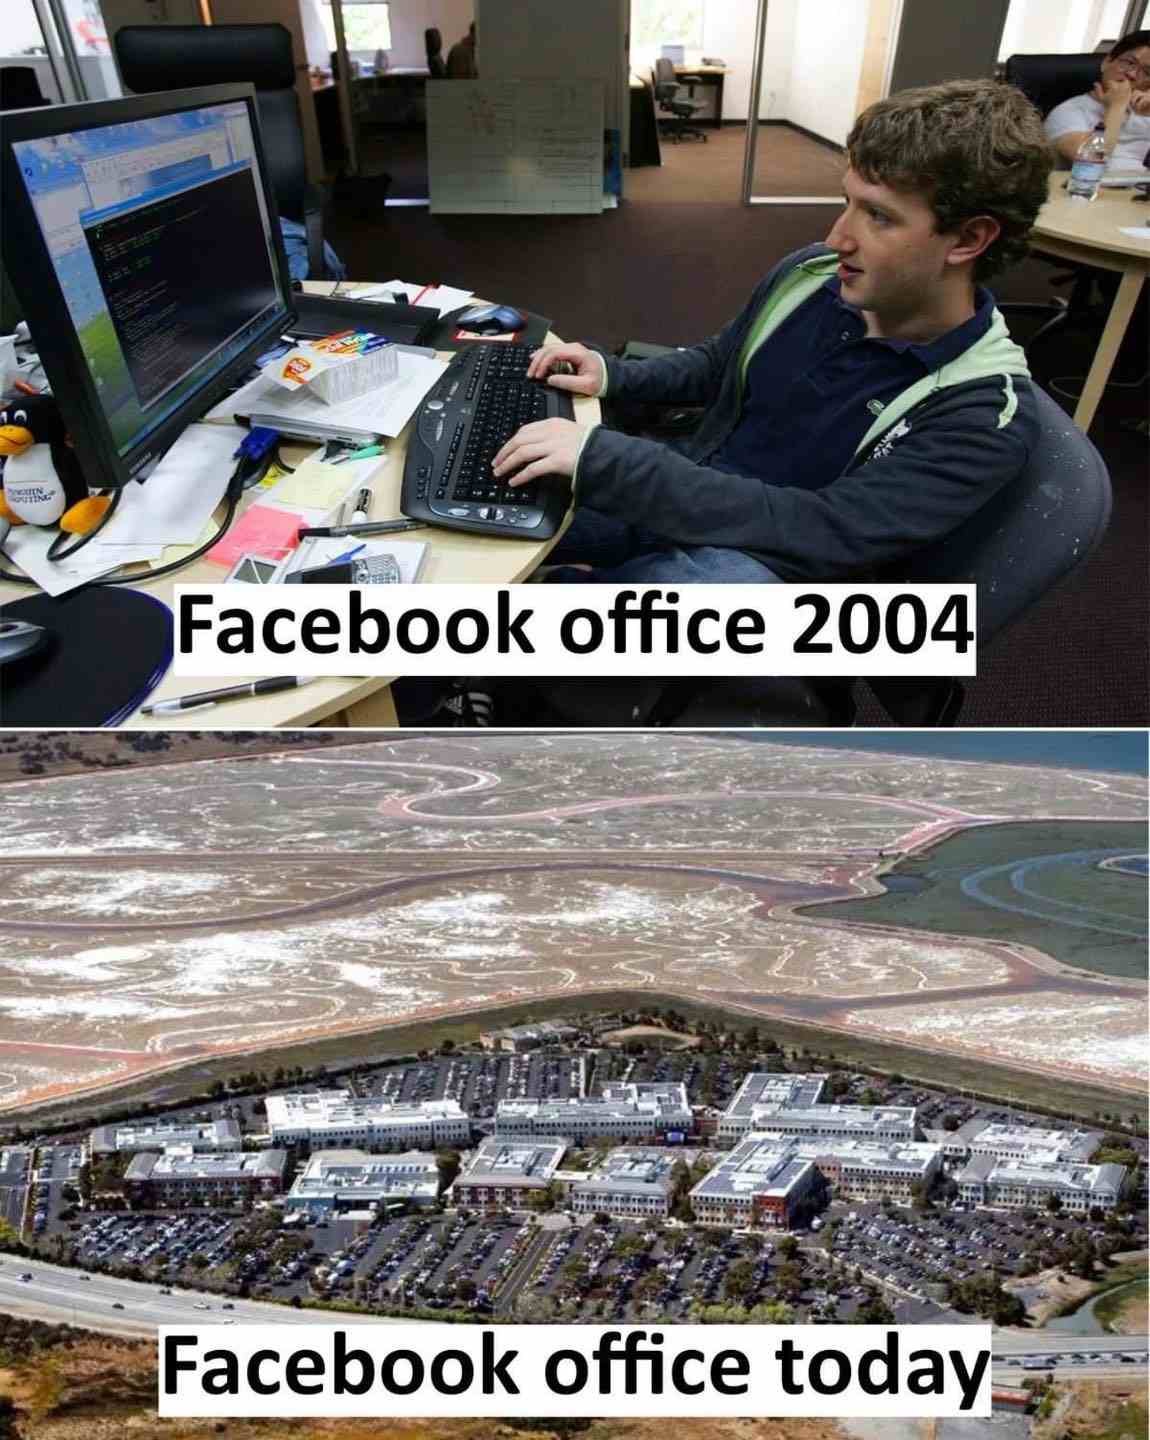 Facebook Office 2004 vs Facebook Office today